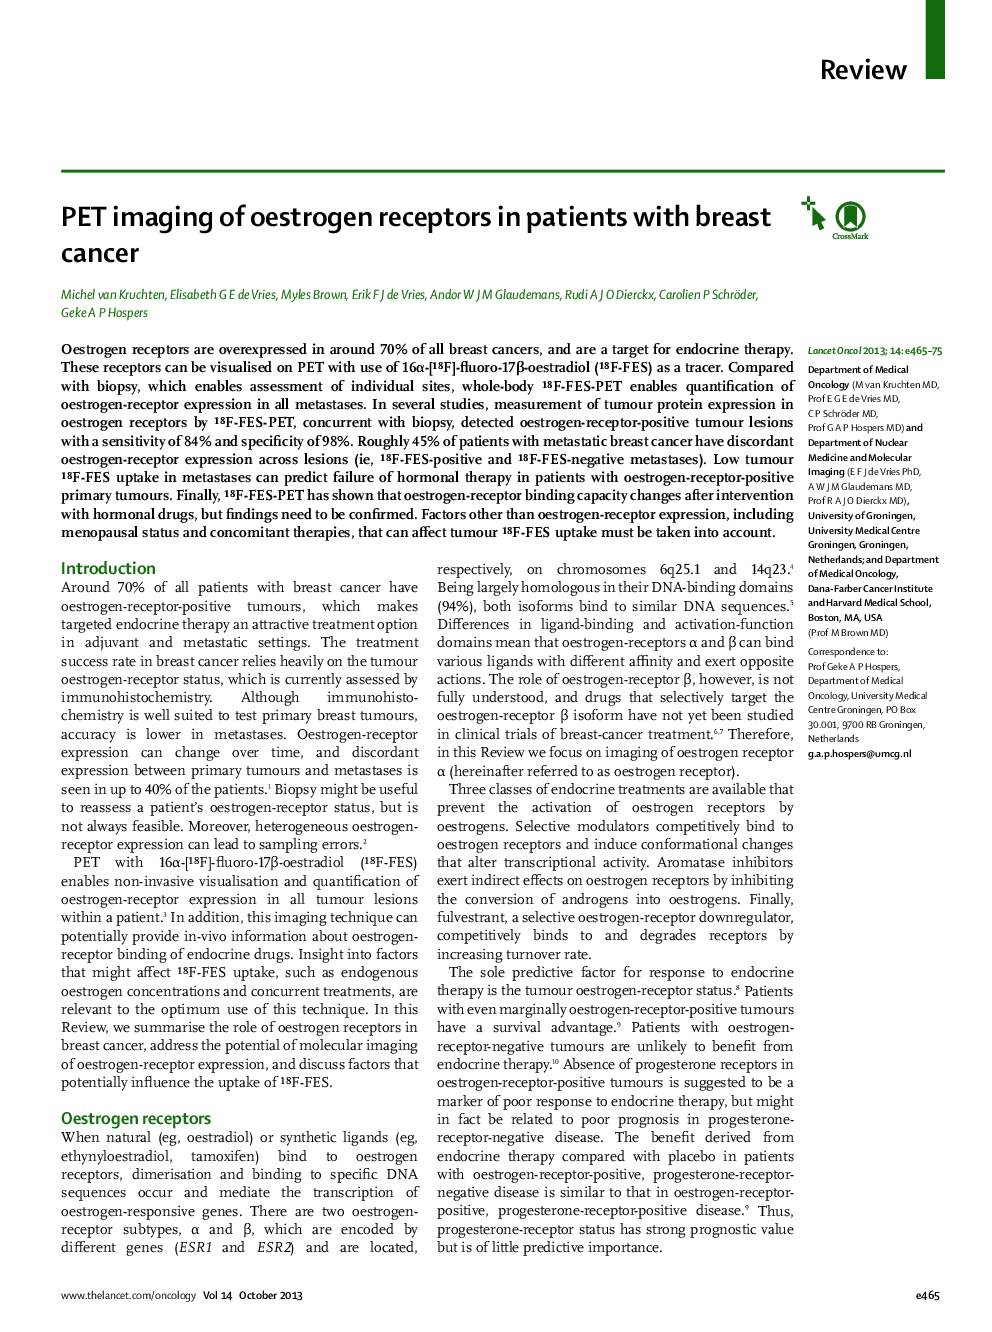 PET imaging of oestrogen receptors in patients with breast cancer